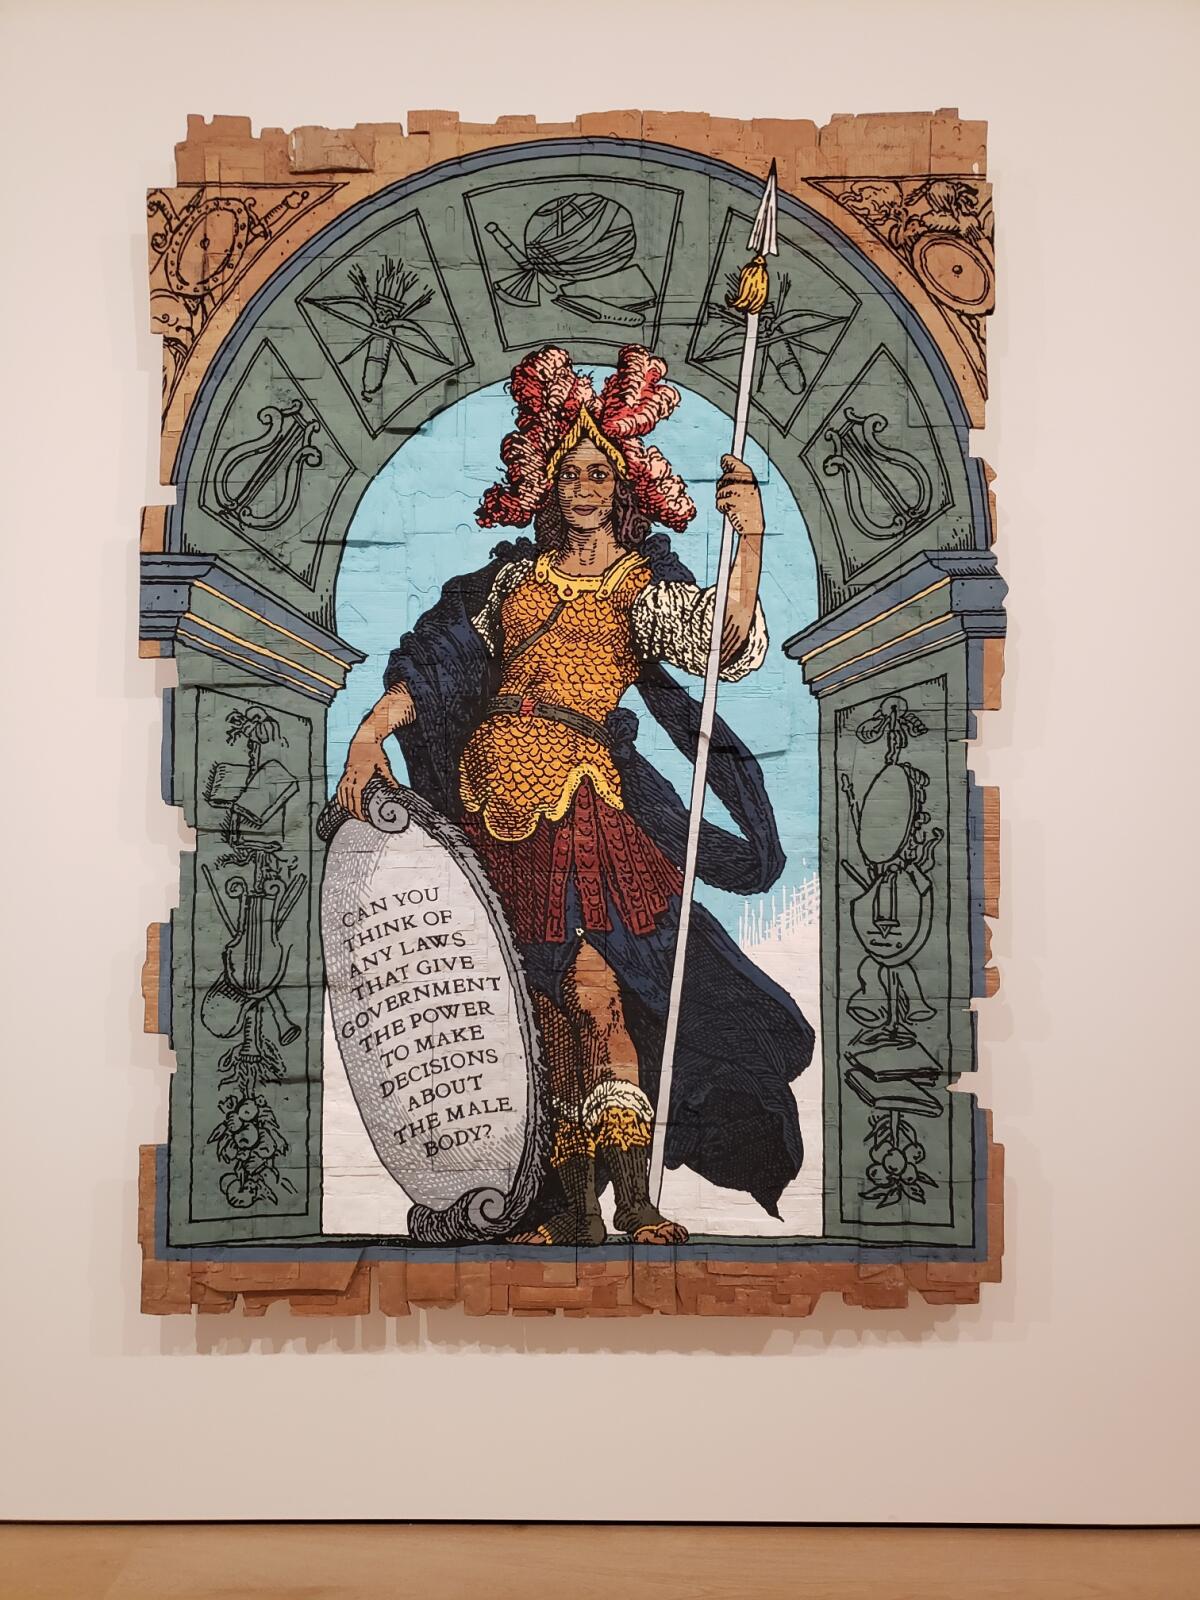 A work of art depicts Kamala Harris holding a spear.